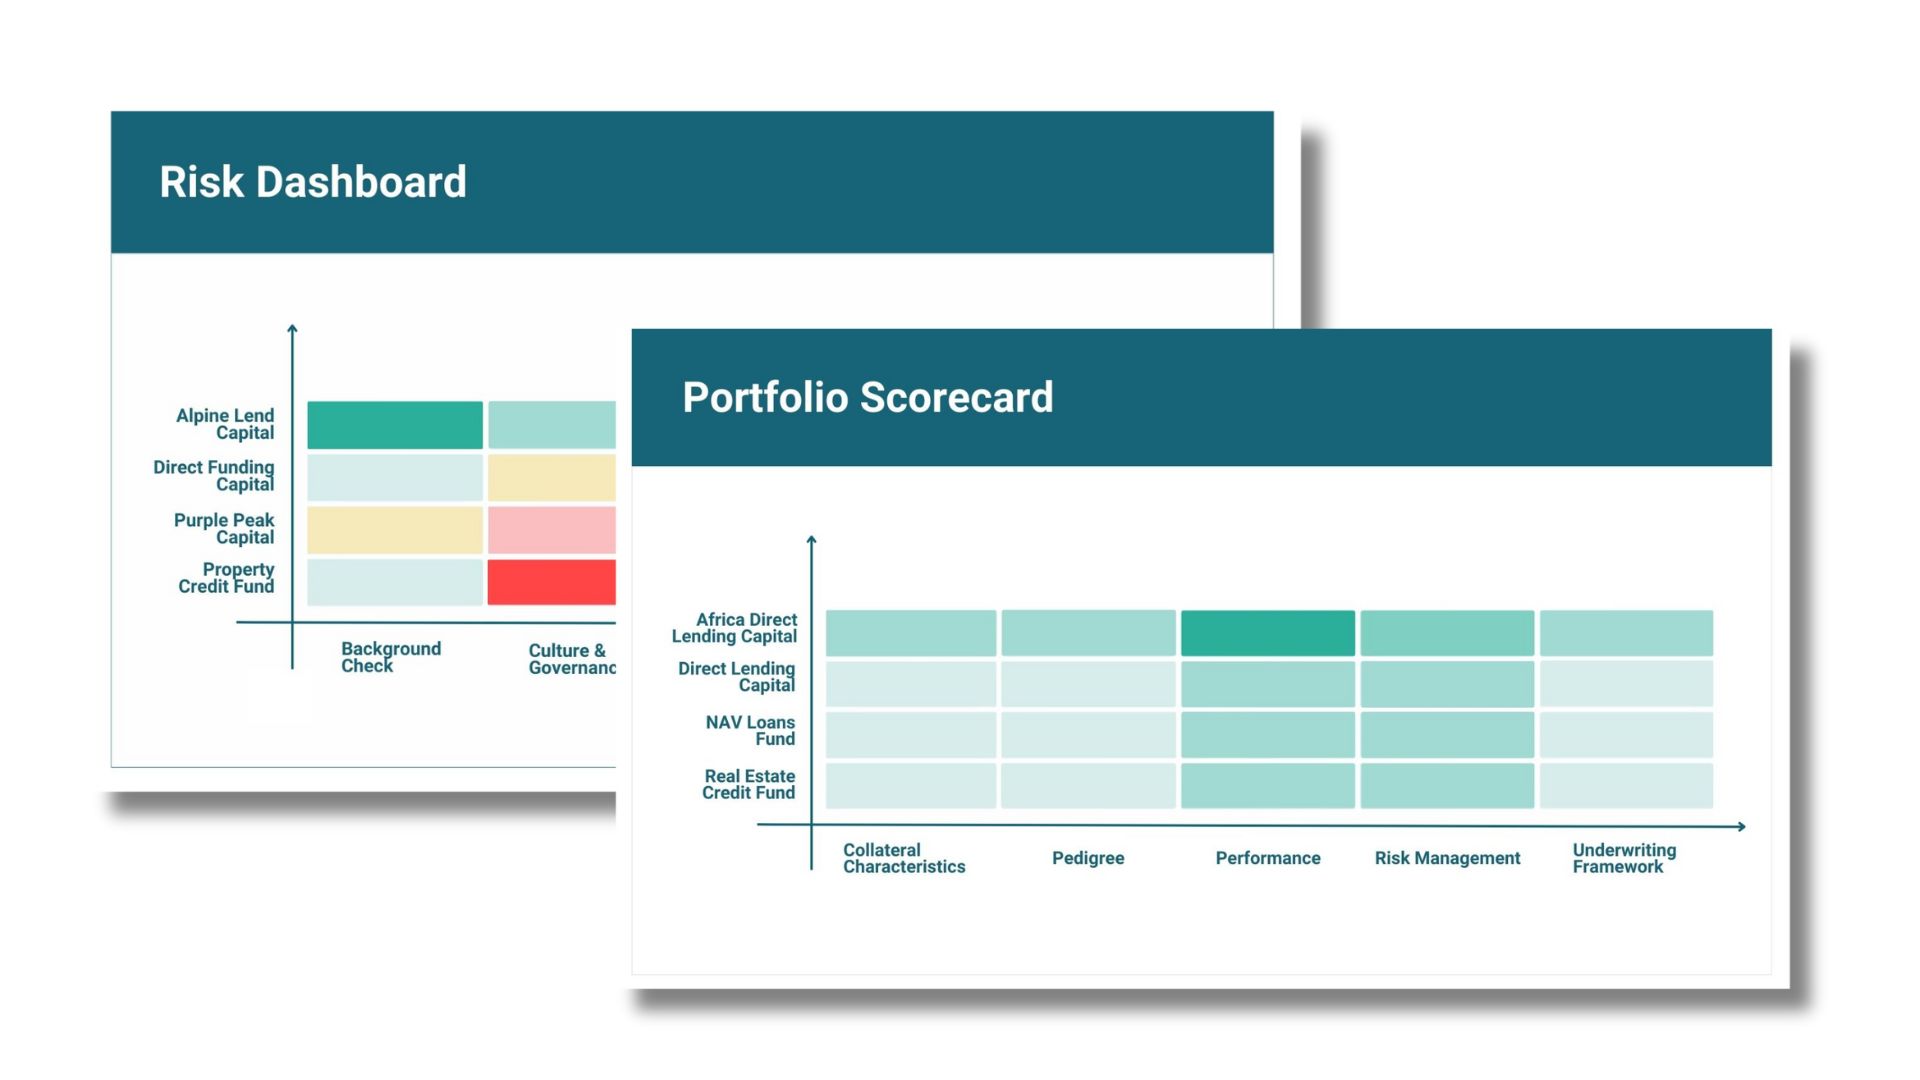 Portfolio Scorecard Risk Assessment